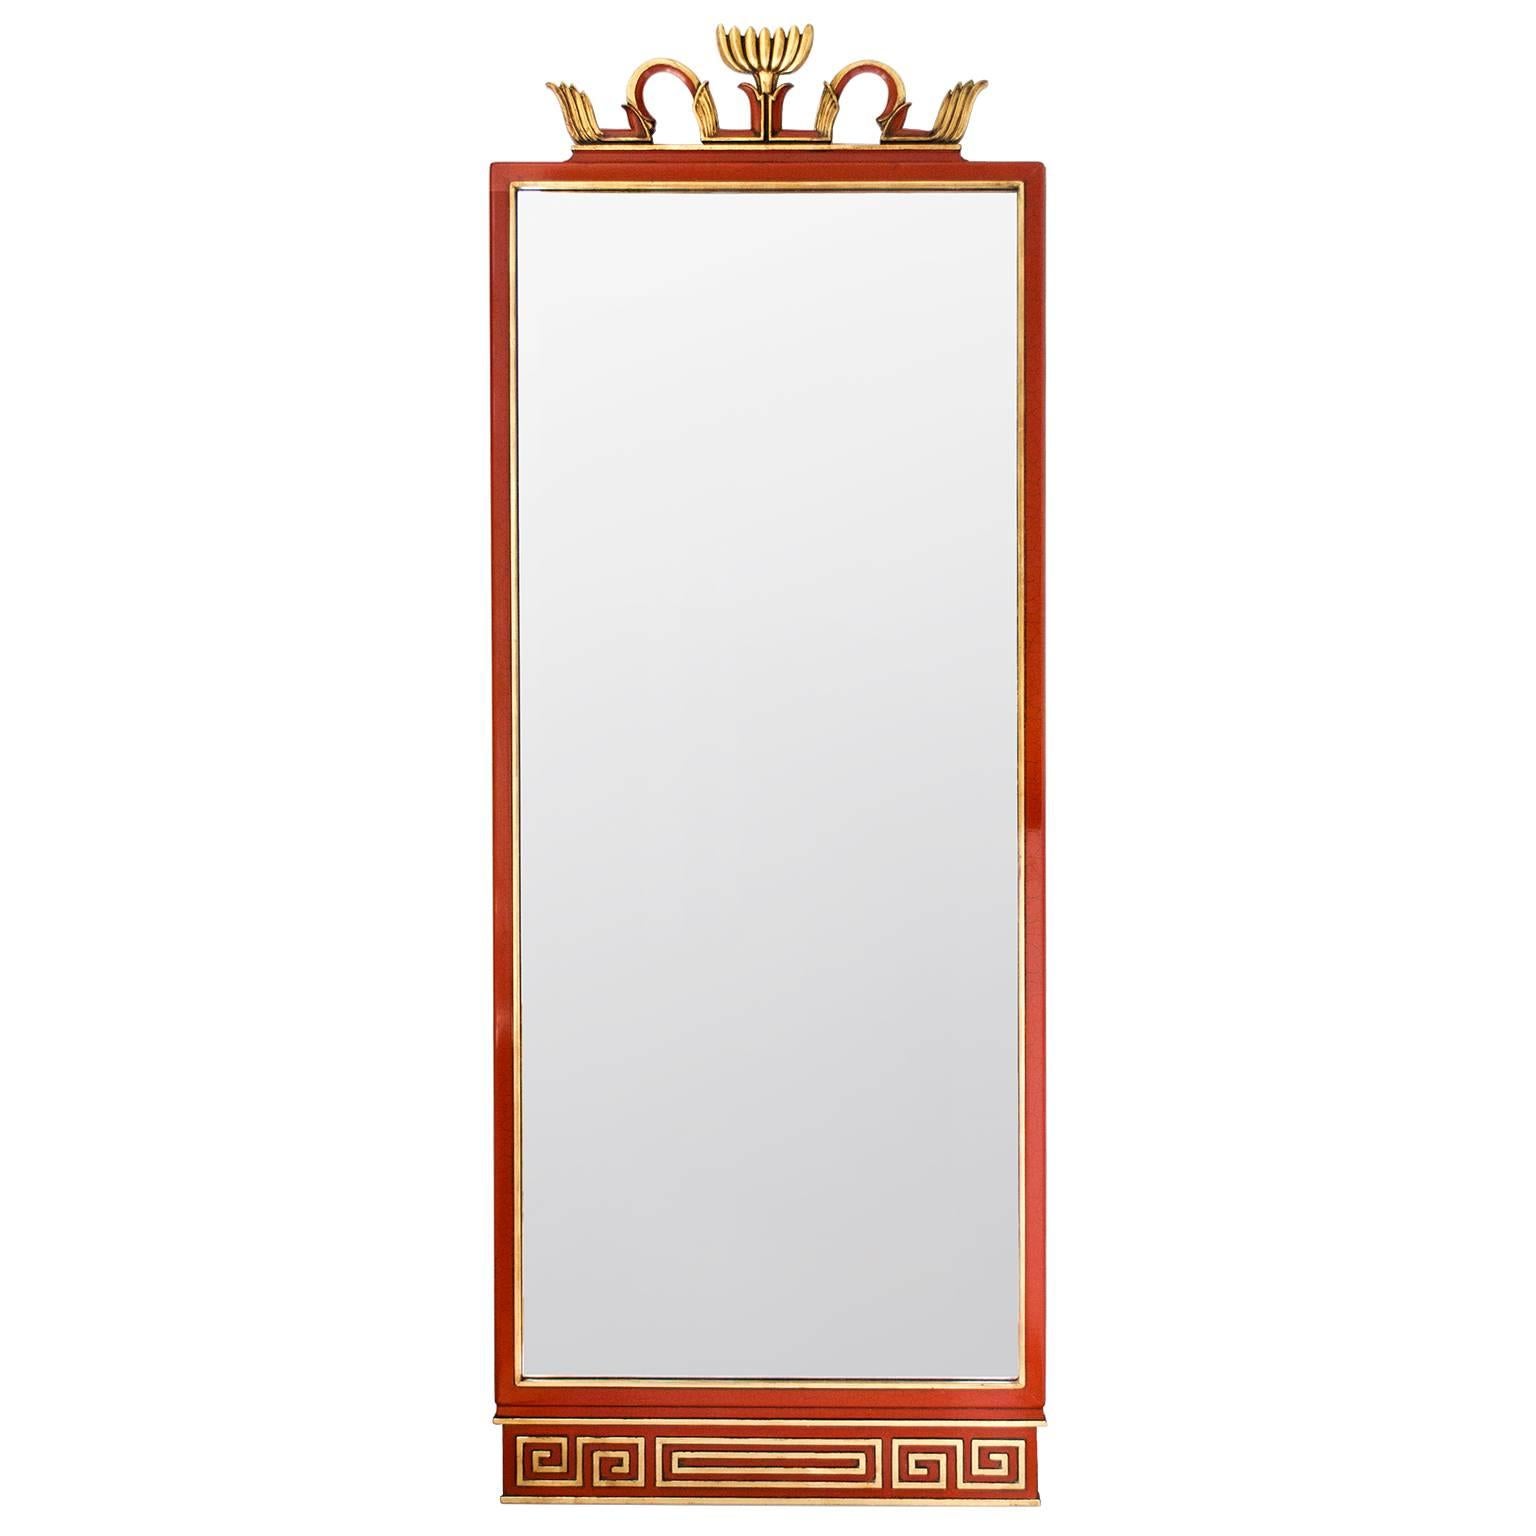 Rare Axel Einar Hjorth Swedish Art Deco "Abo" Mirror from Nordiska Kompaniet